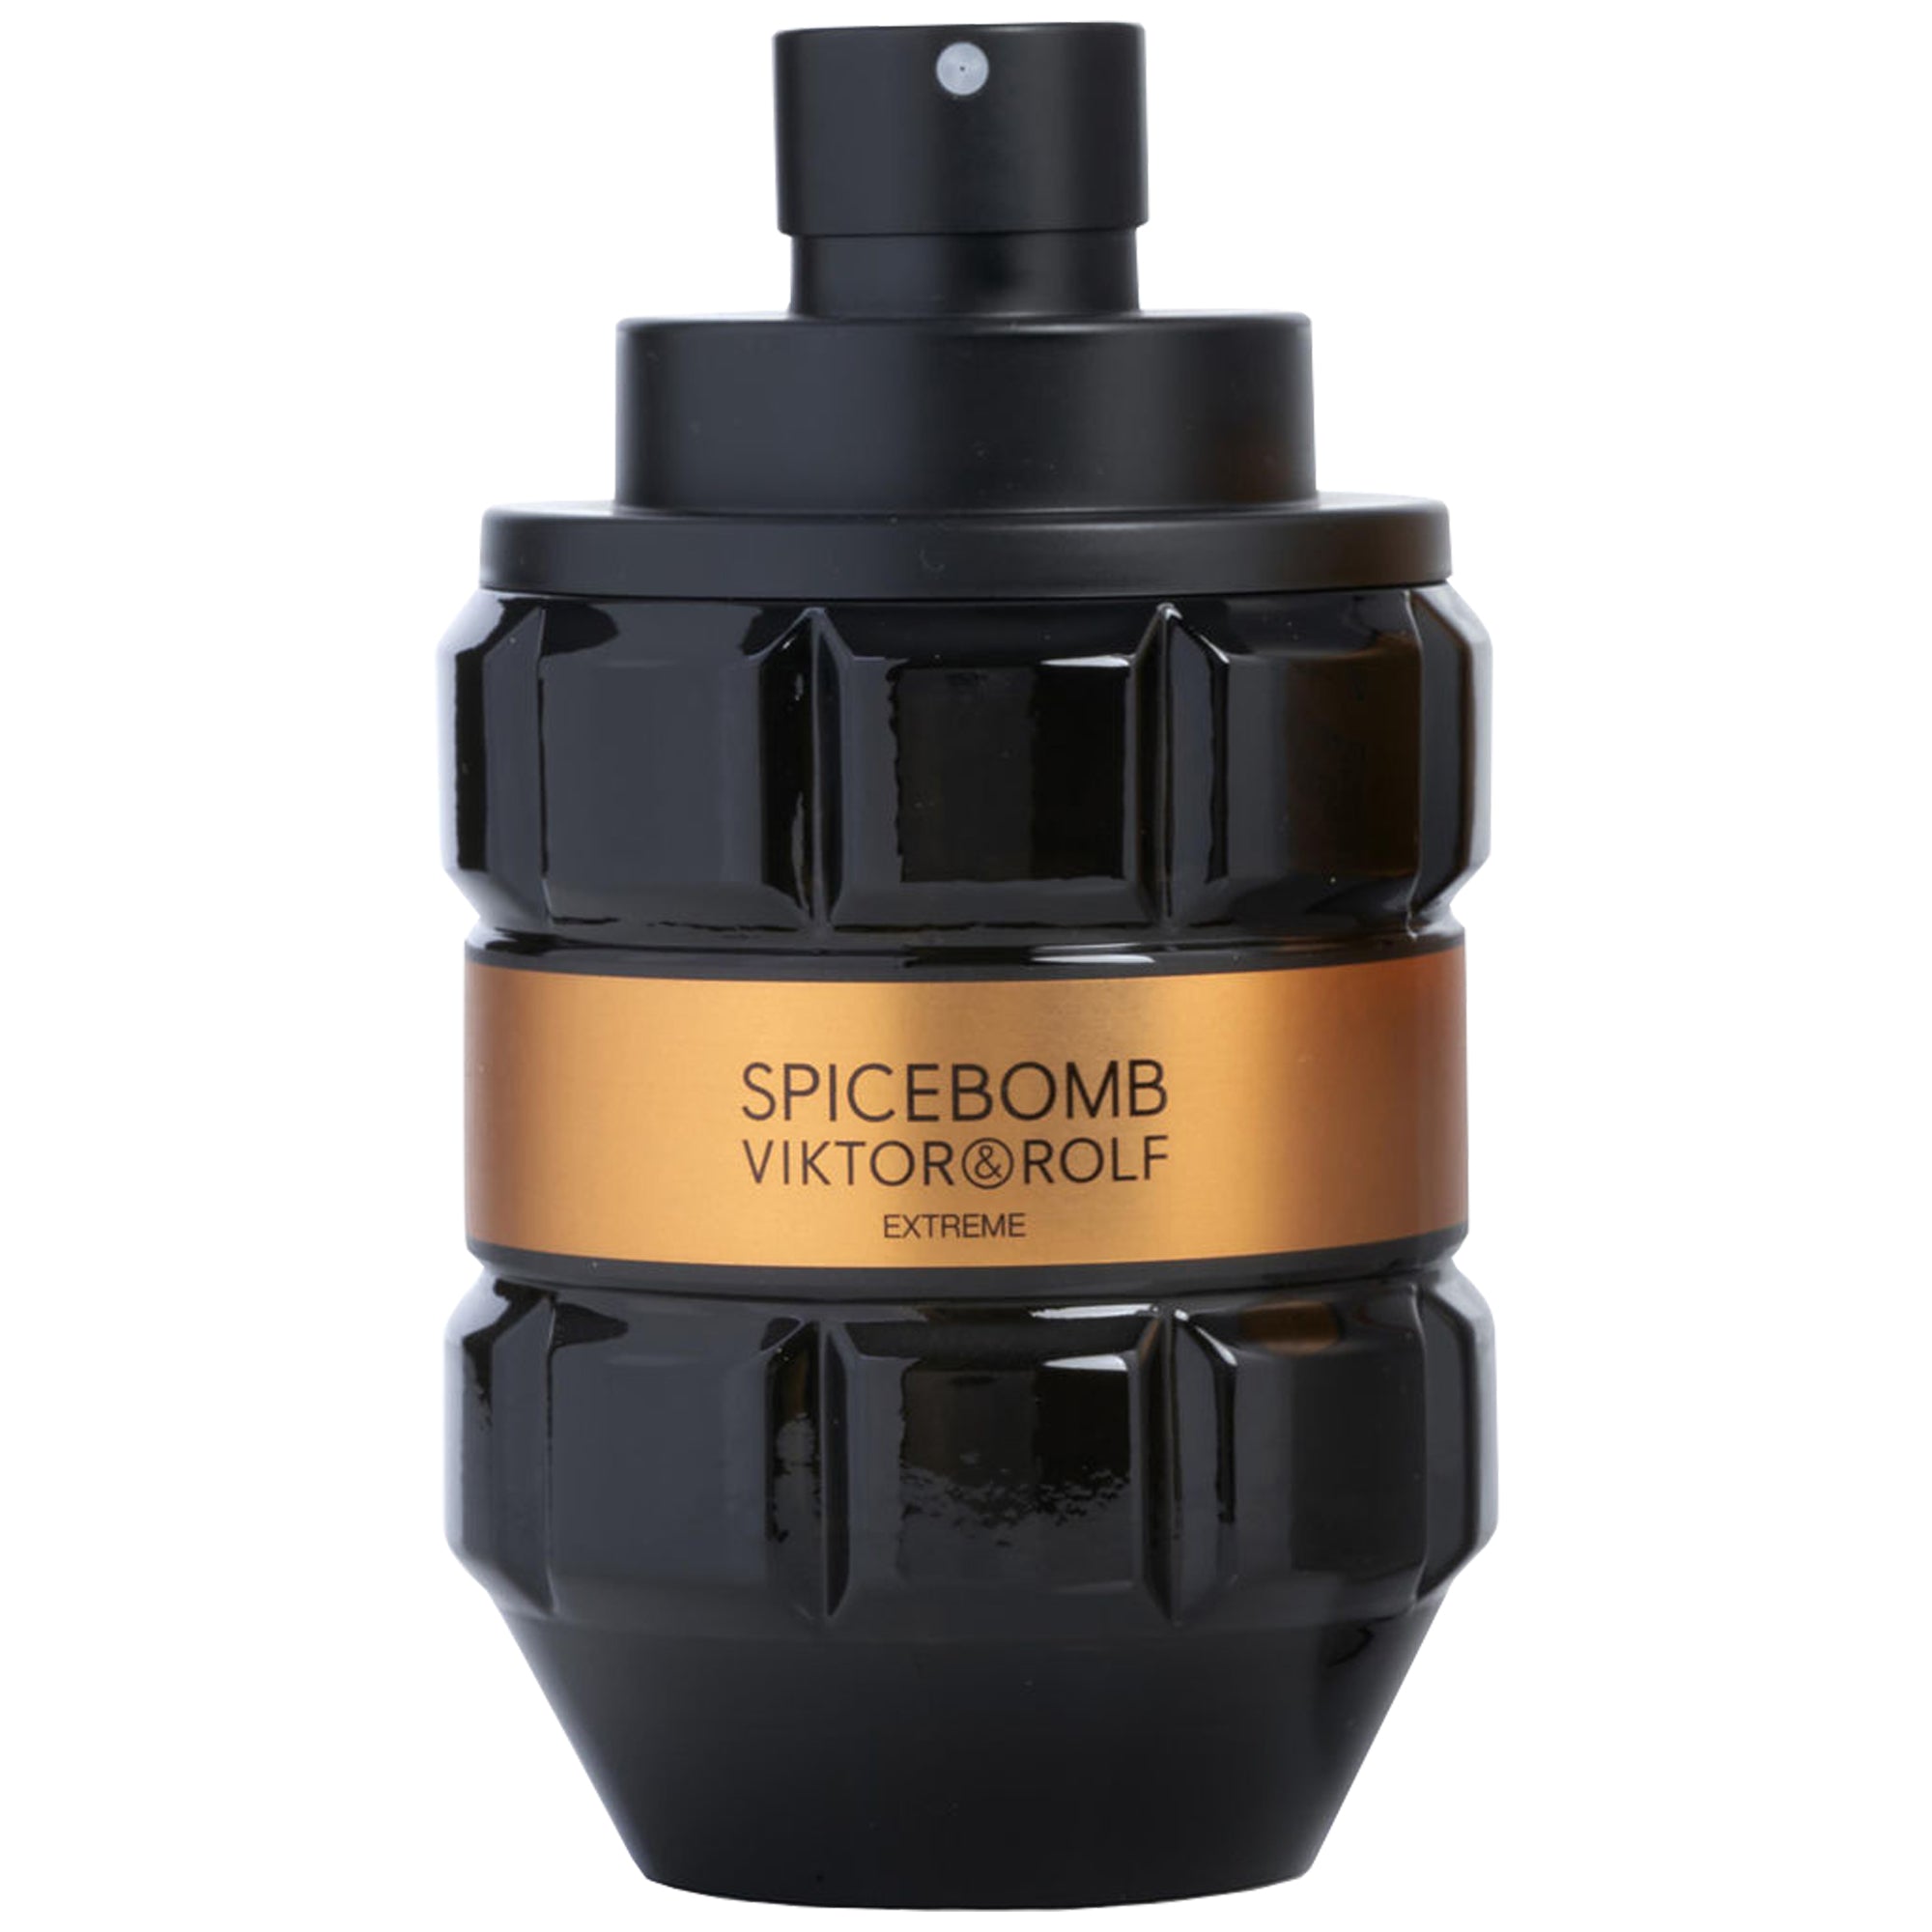 Viktor & Rolf - Spicebomb Extreme perfume oil – Oil Perfumery